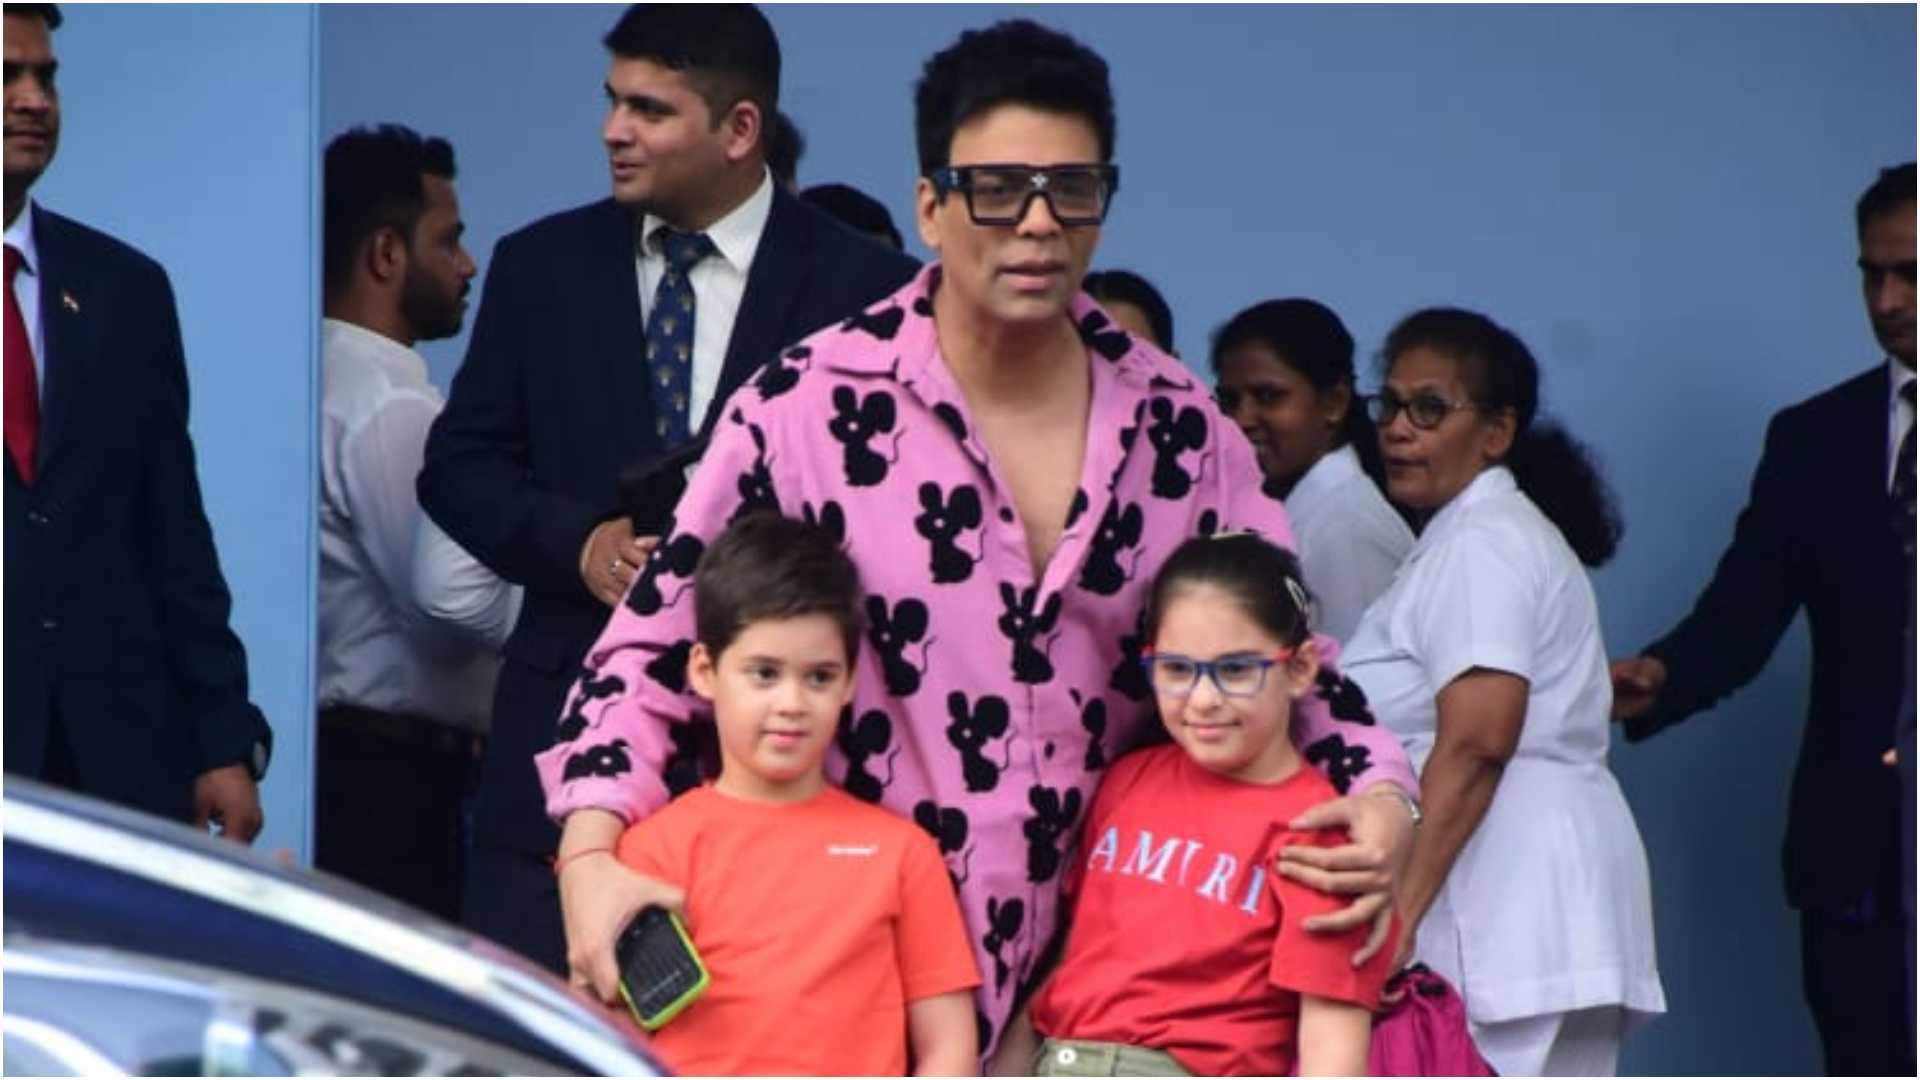 Pics: Karan Johar attends Isha Ambani's children's birthday bash with his twins Yash and Roohi in statement outfits